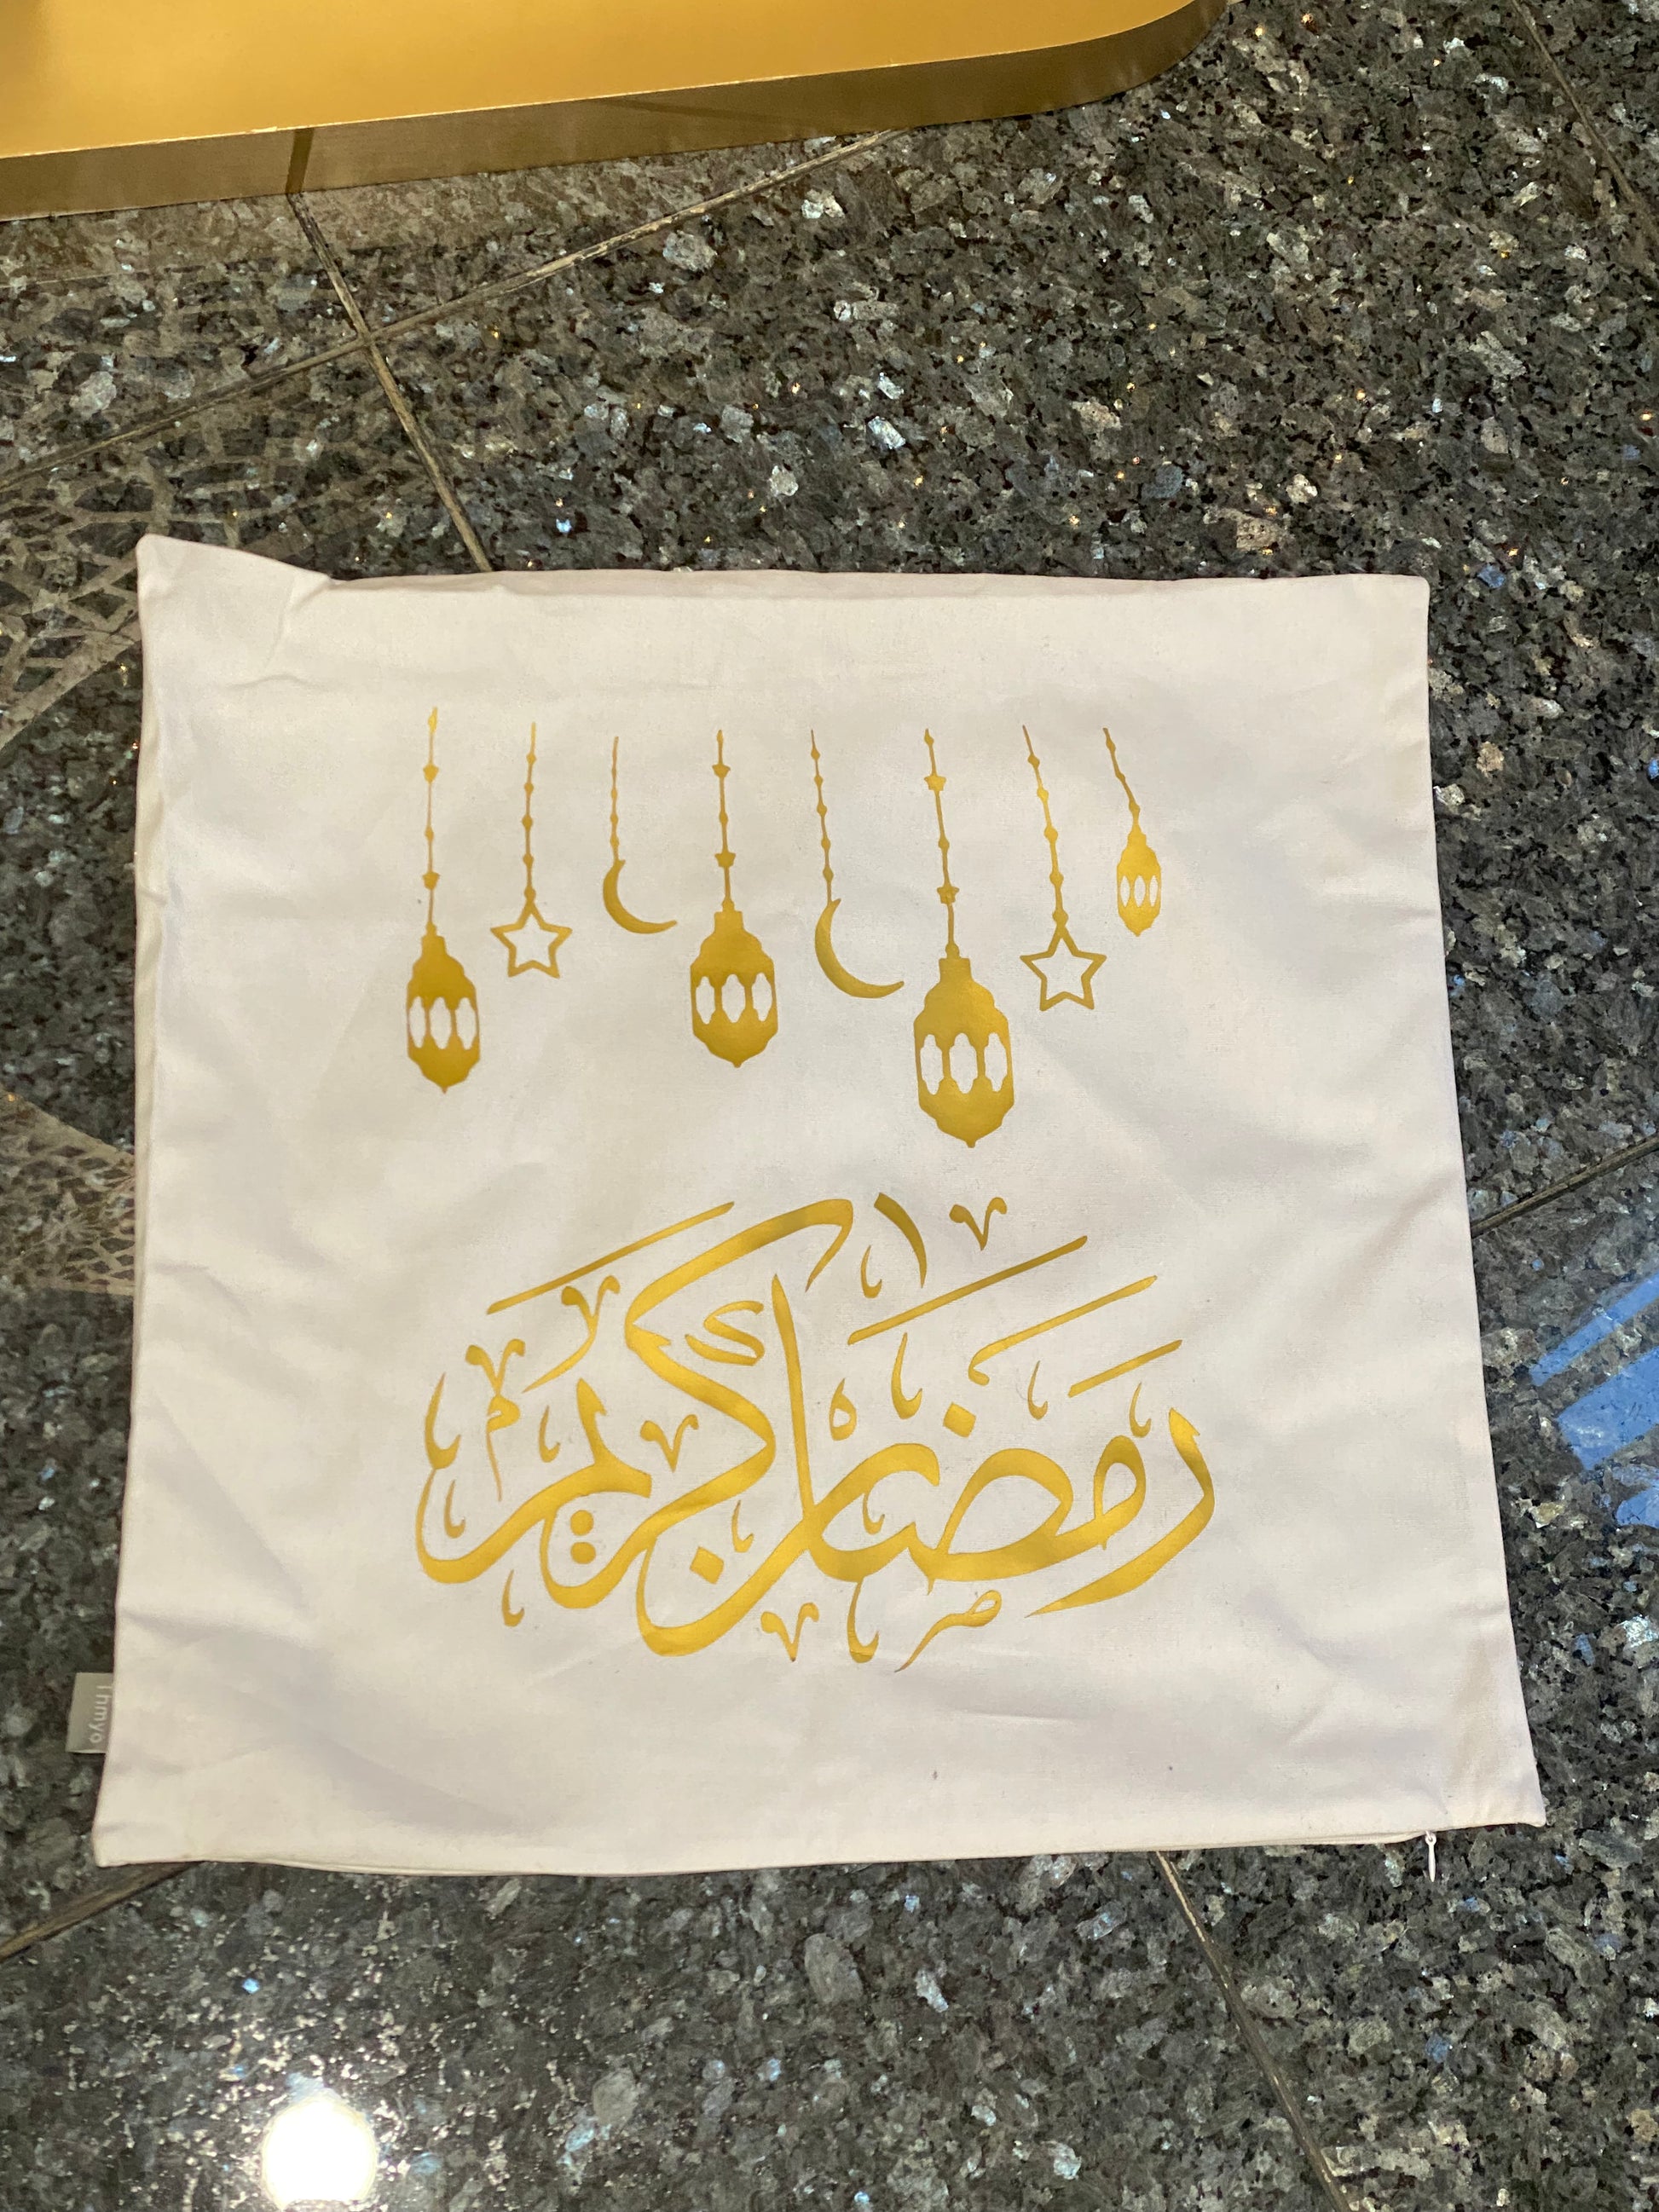 White Ramadan Pillow Case